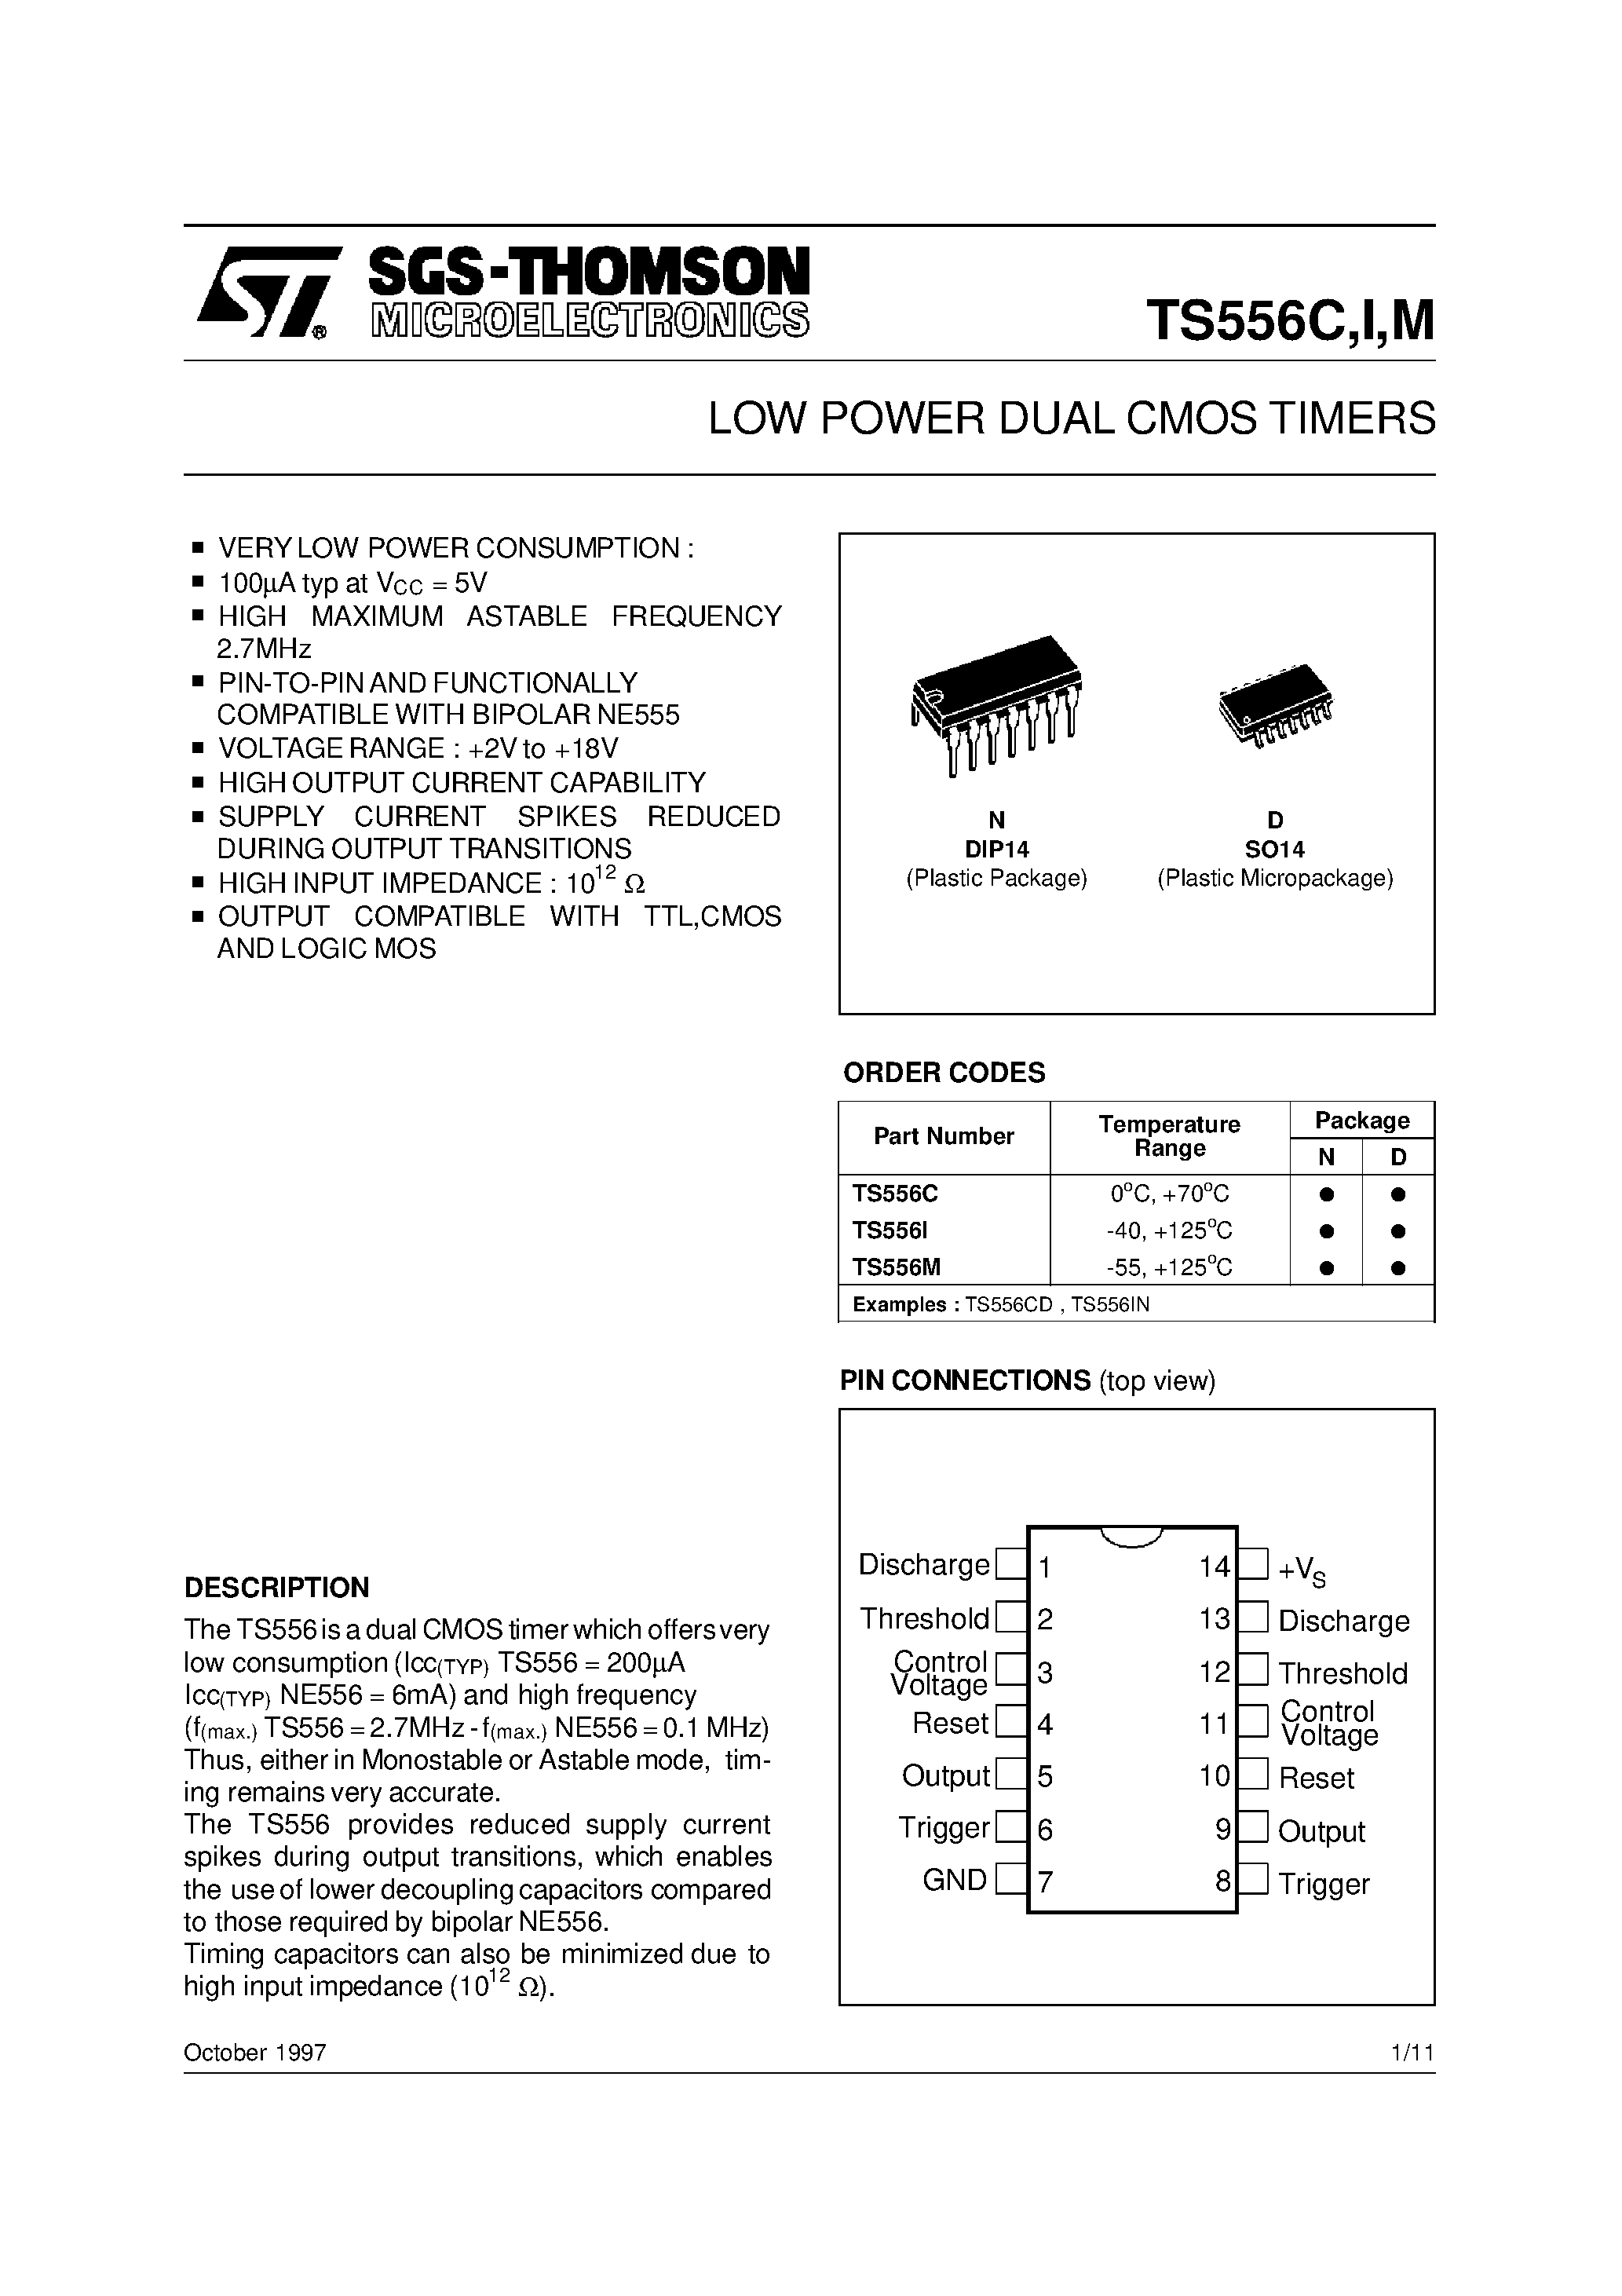 Datasheet TS556M - LOW POWER DUAL CMOS TIMER page 1